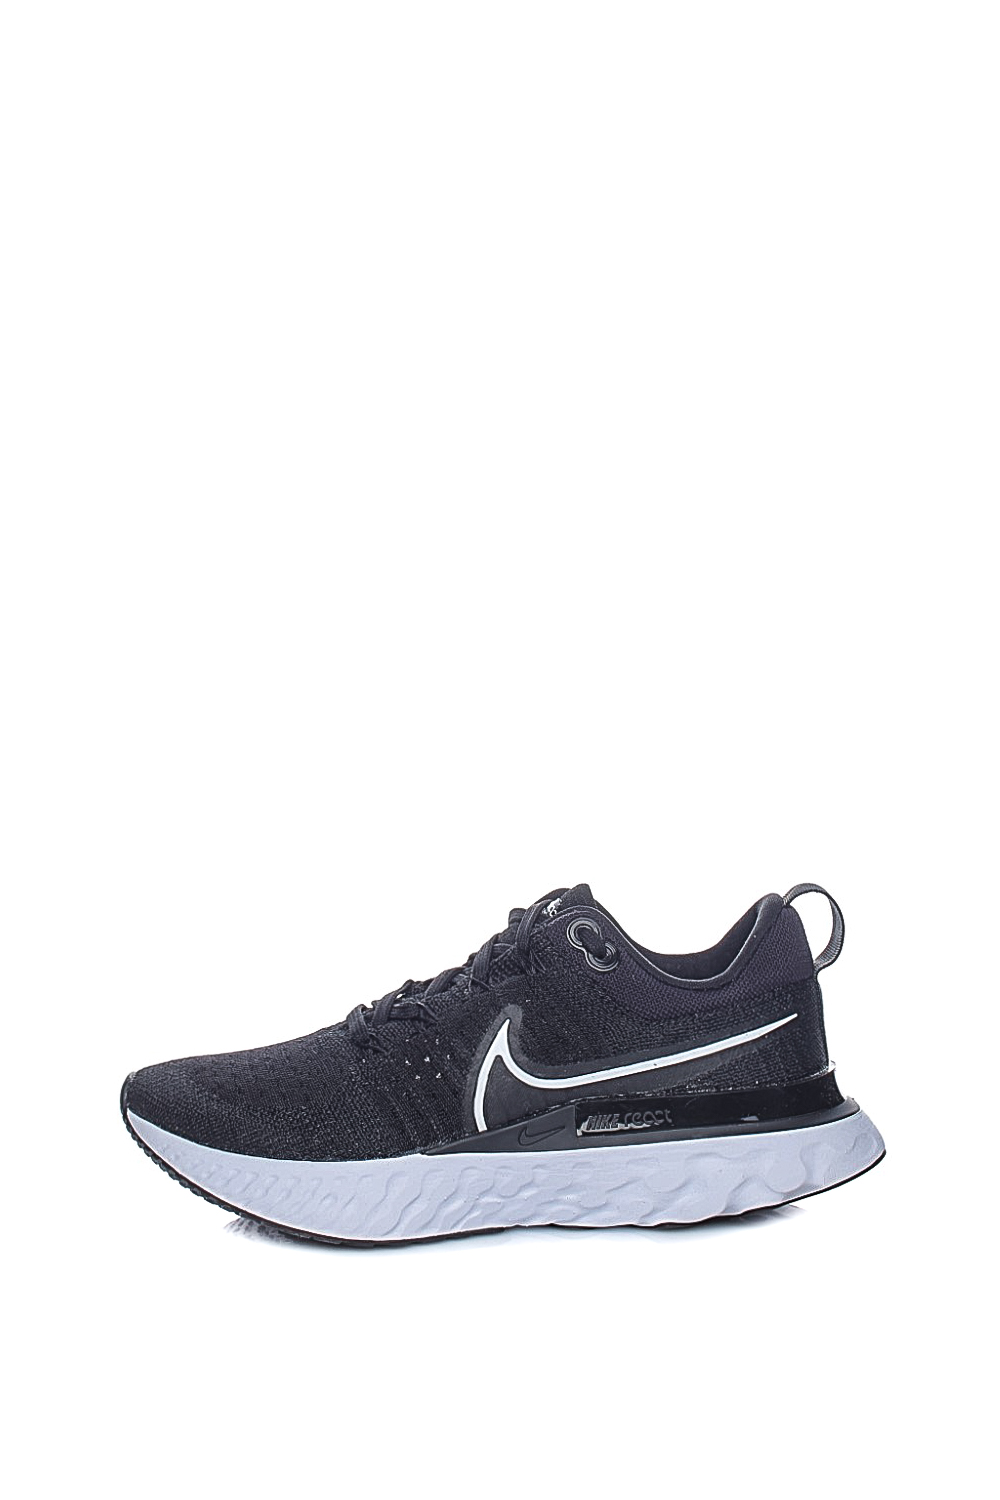 NIKE - Γυναικεία παπούτσια για τρέξιμο NIKE REACT INFINITY μαύρα Γυναικεία/Παπούτσια/Αθλητικά/Running